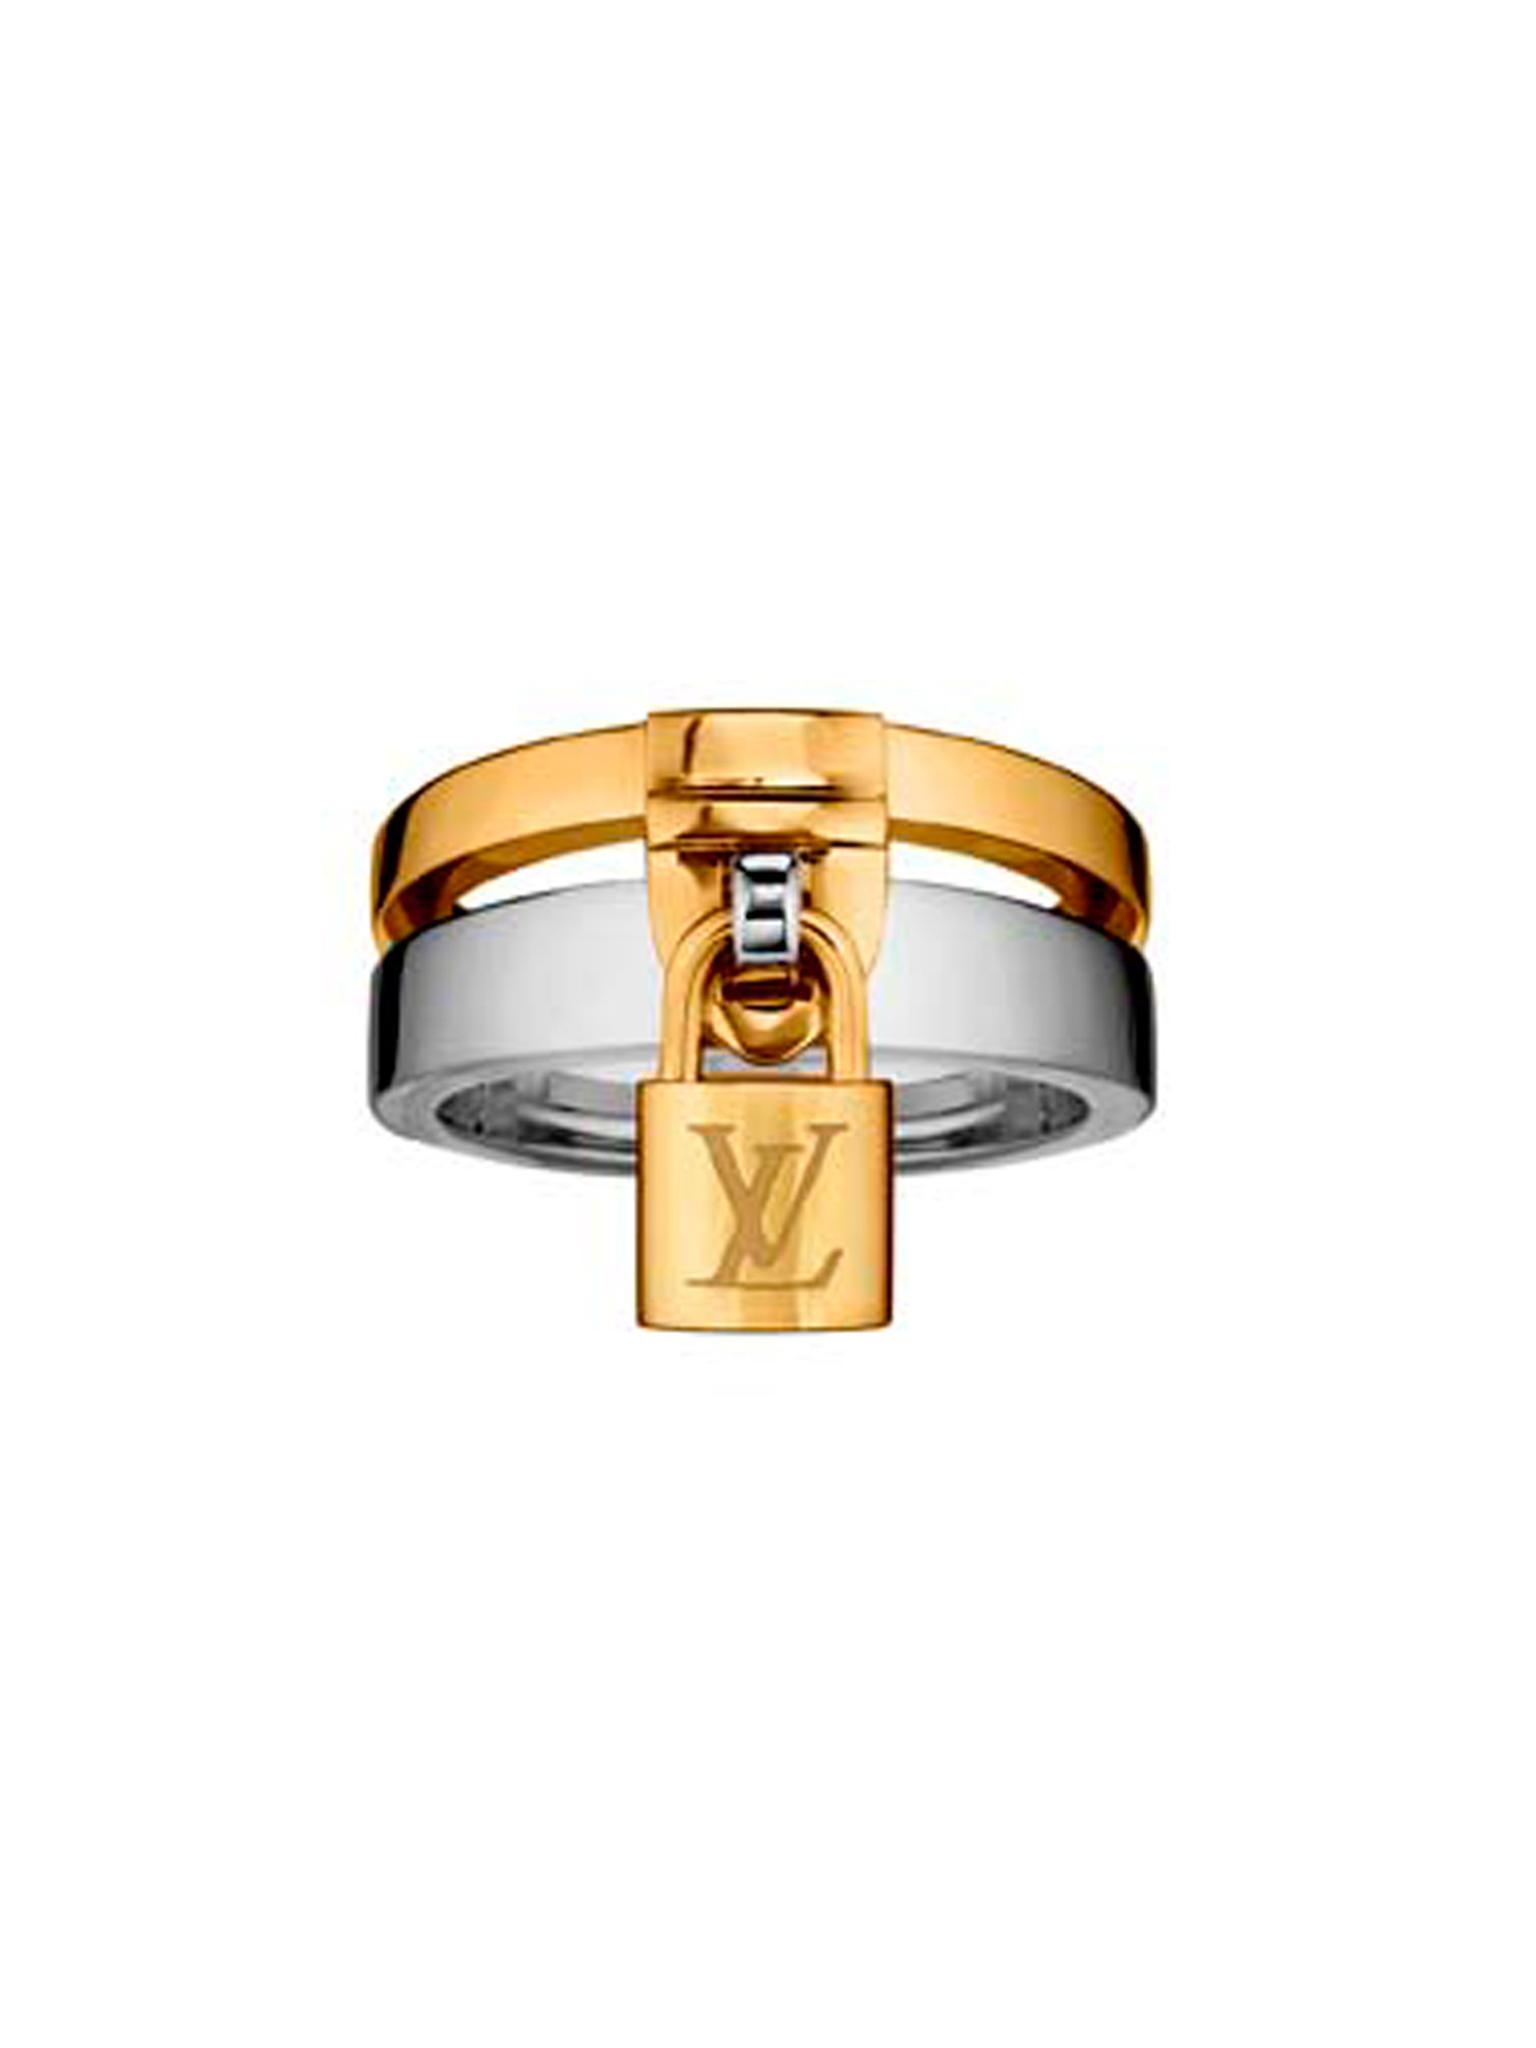 LV gold ring louis vuitton